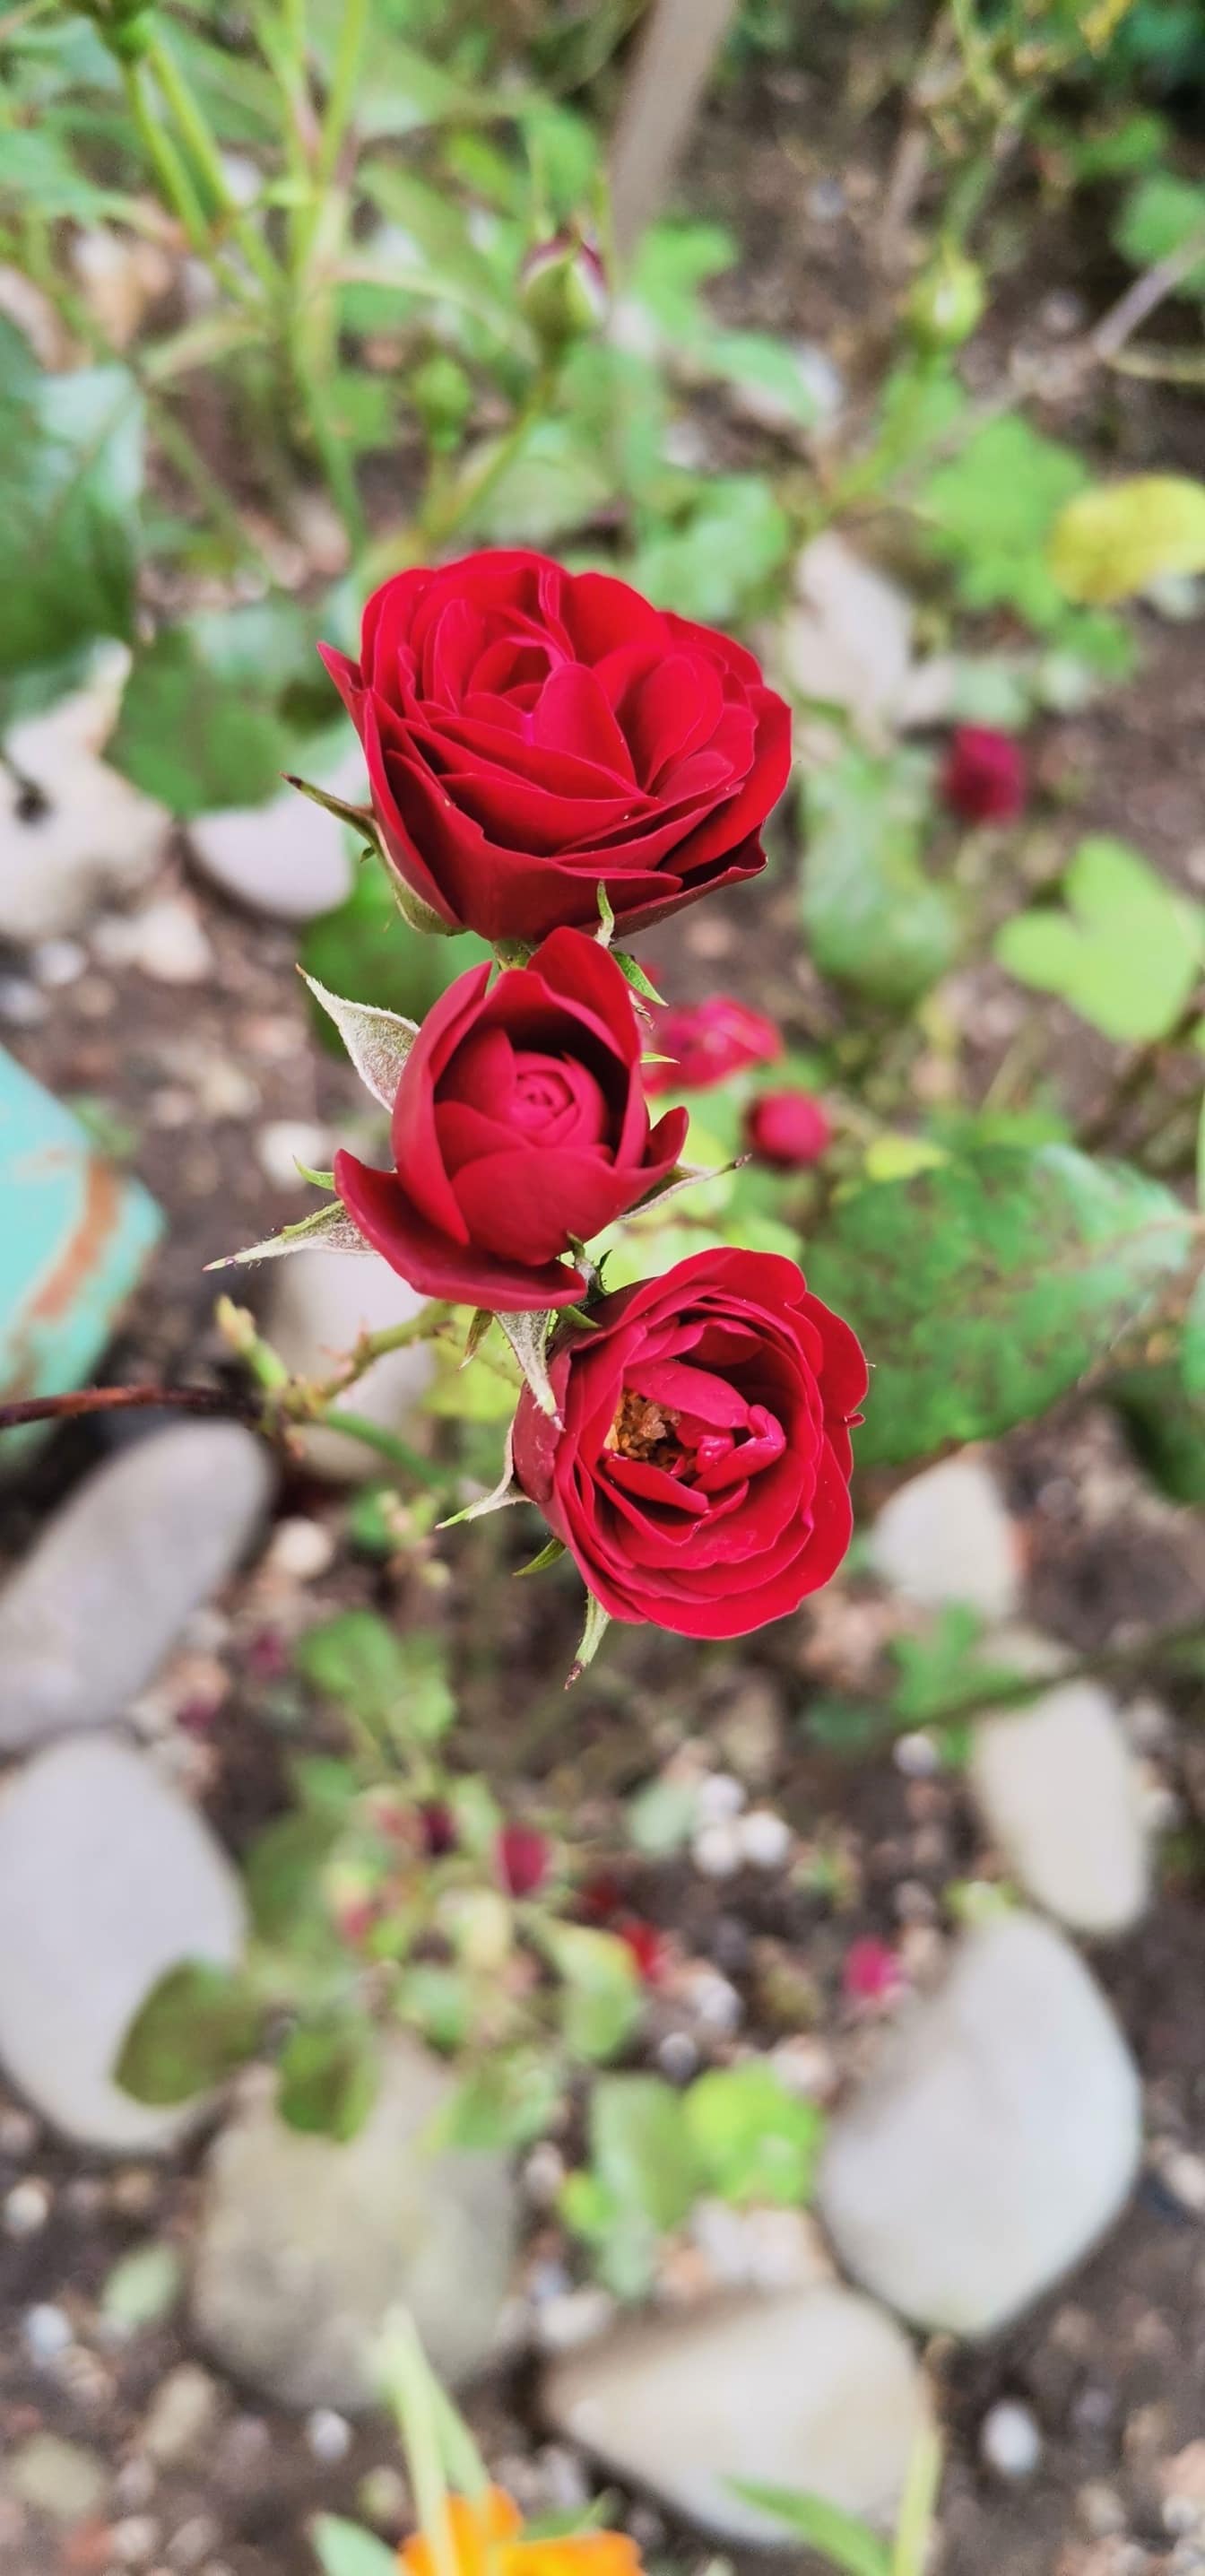 Tiga bunga kuncup mawar merah tua di taman close-up